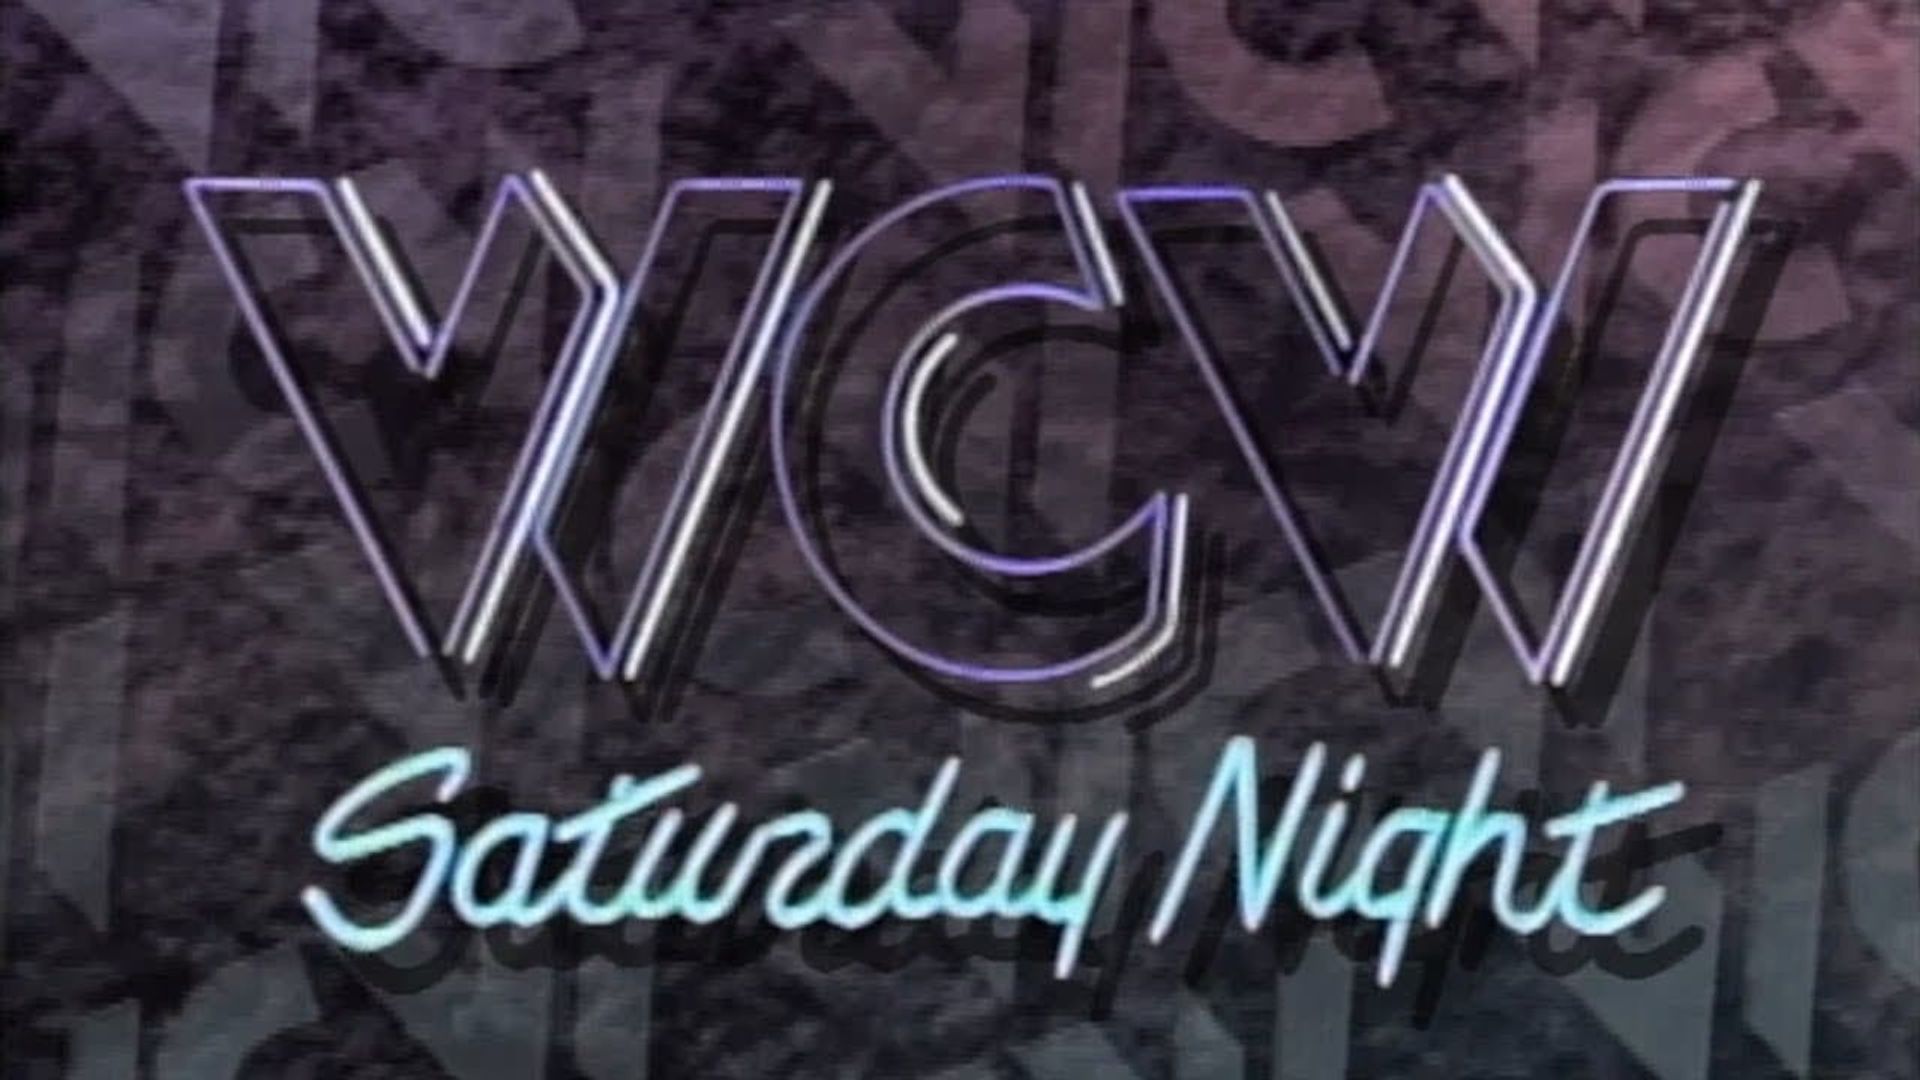 WCW Saturday Night background